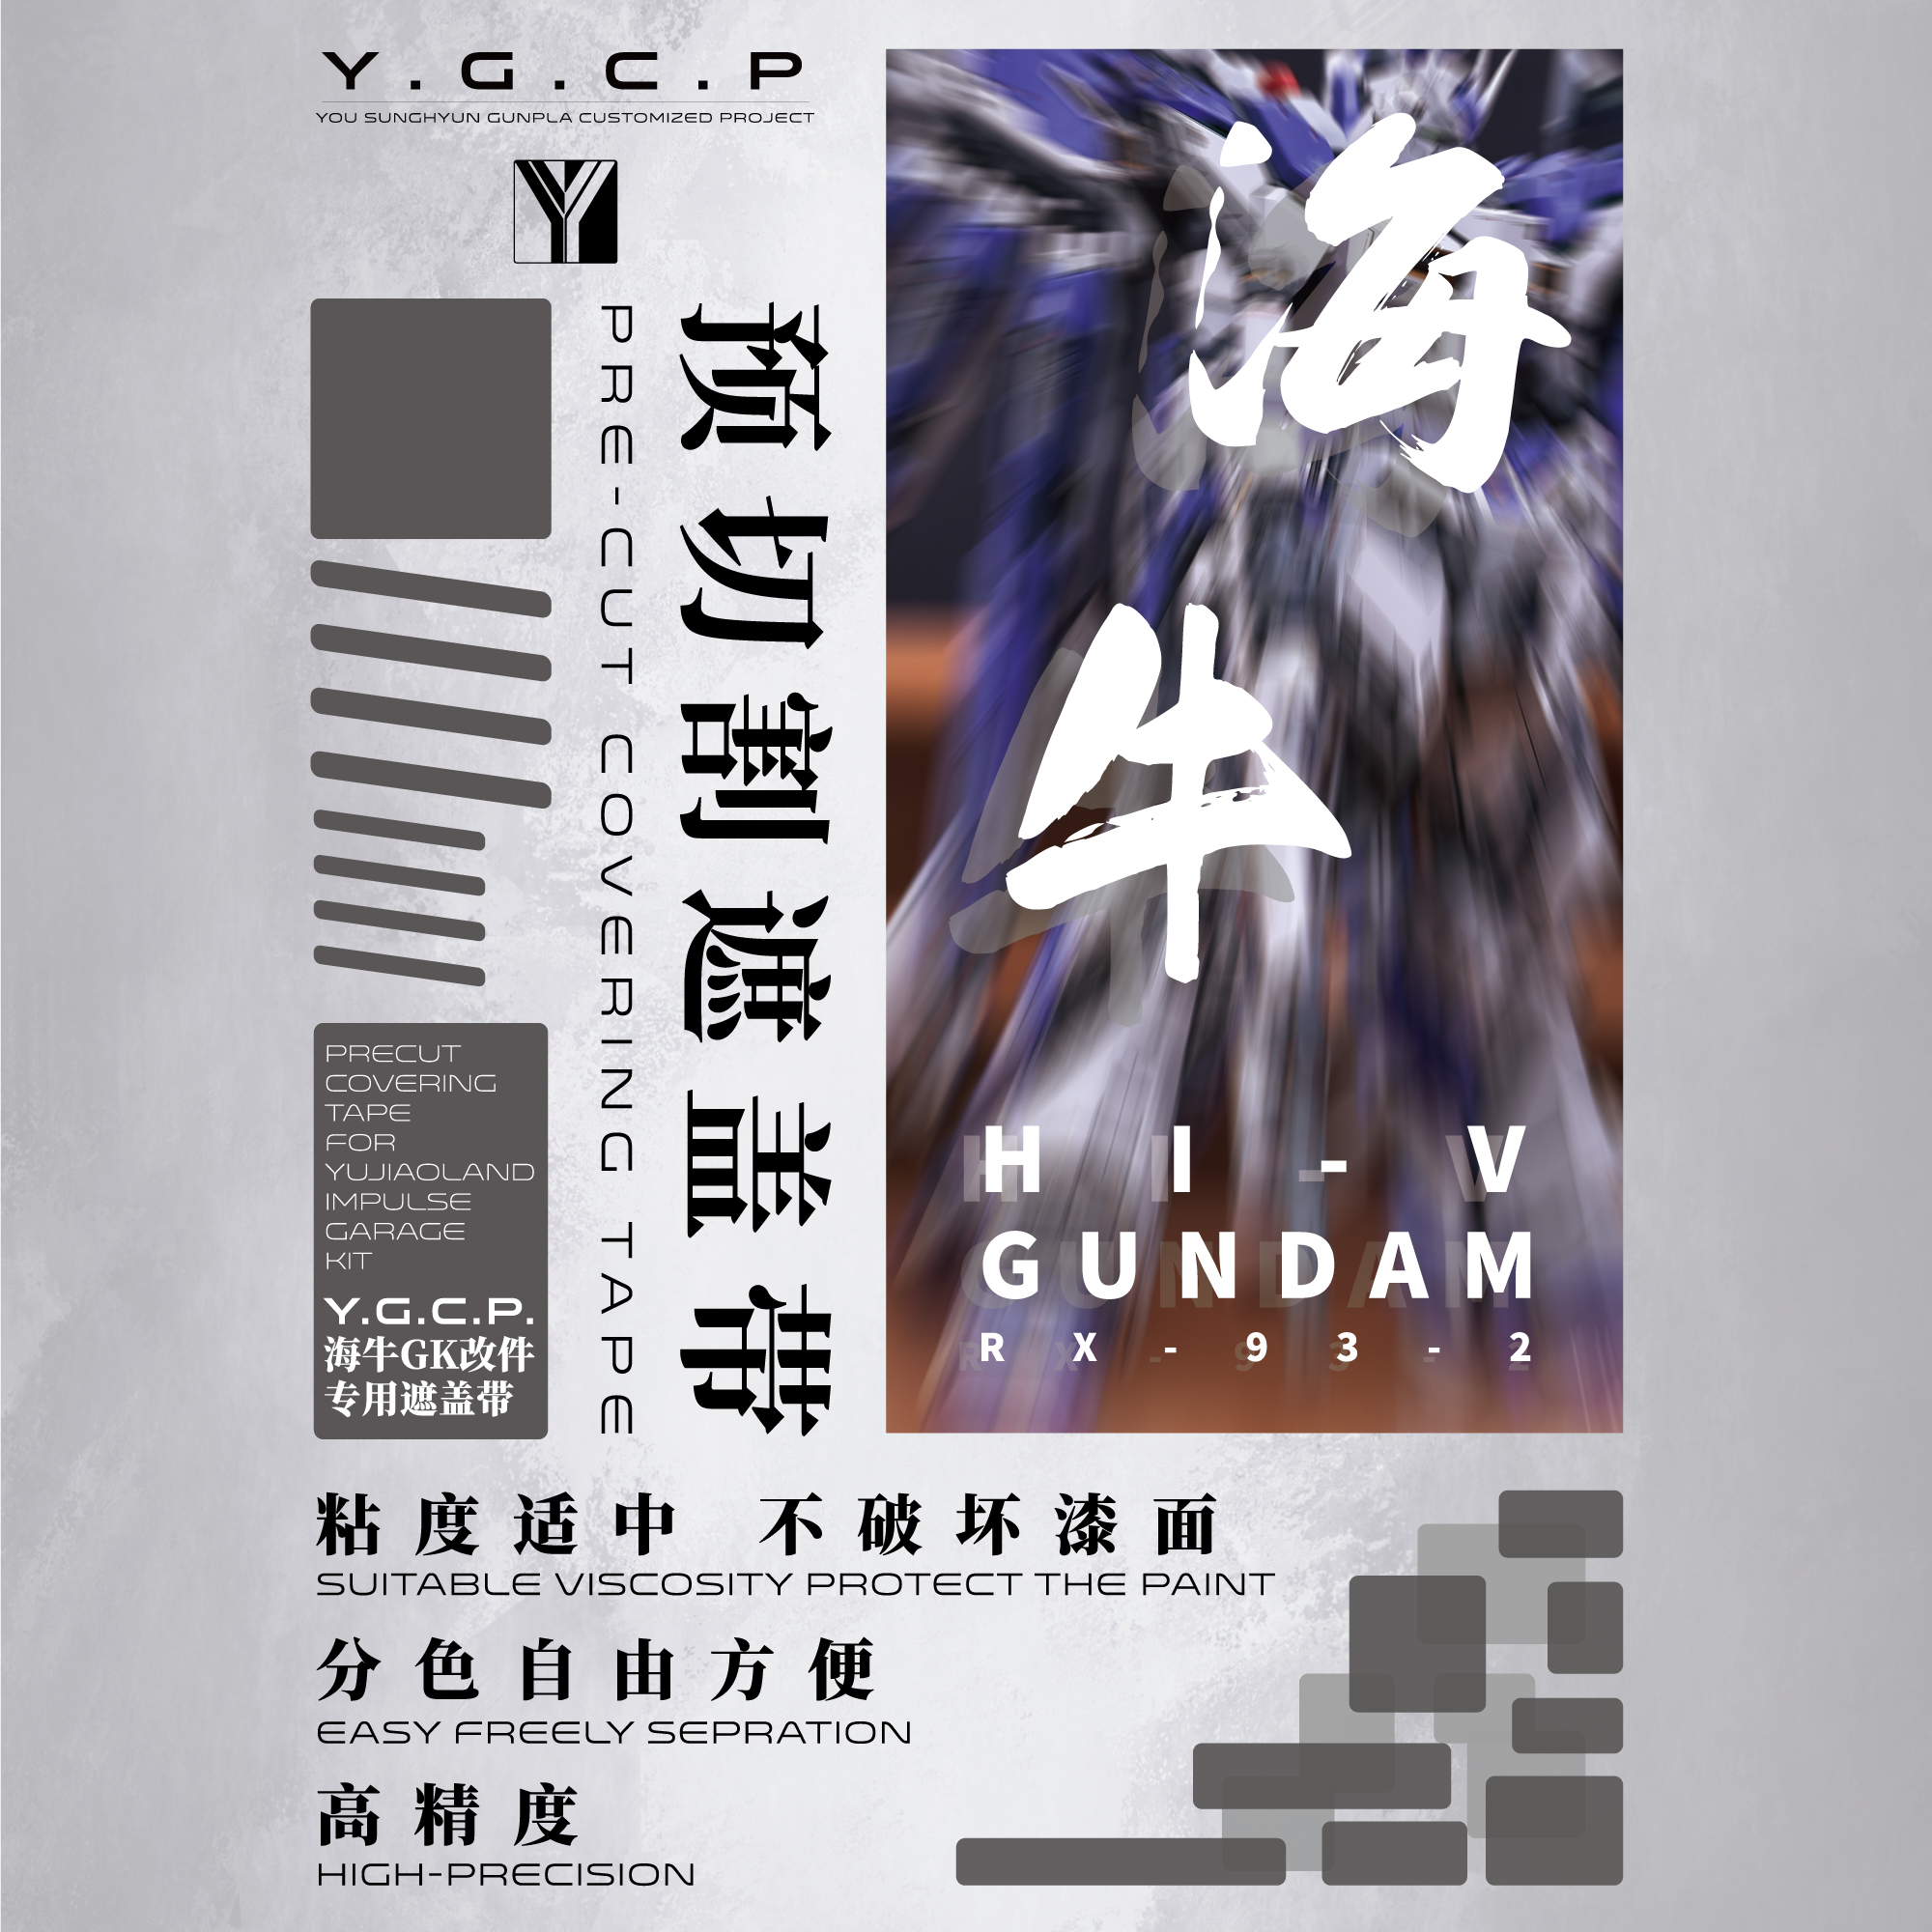 G908_YGCP_yujiaoland_mg_hinu_001.jpg